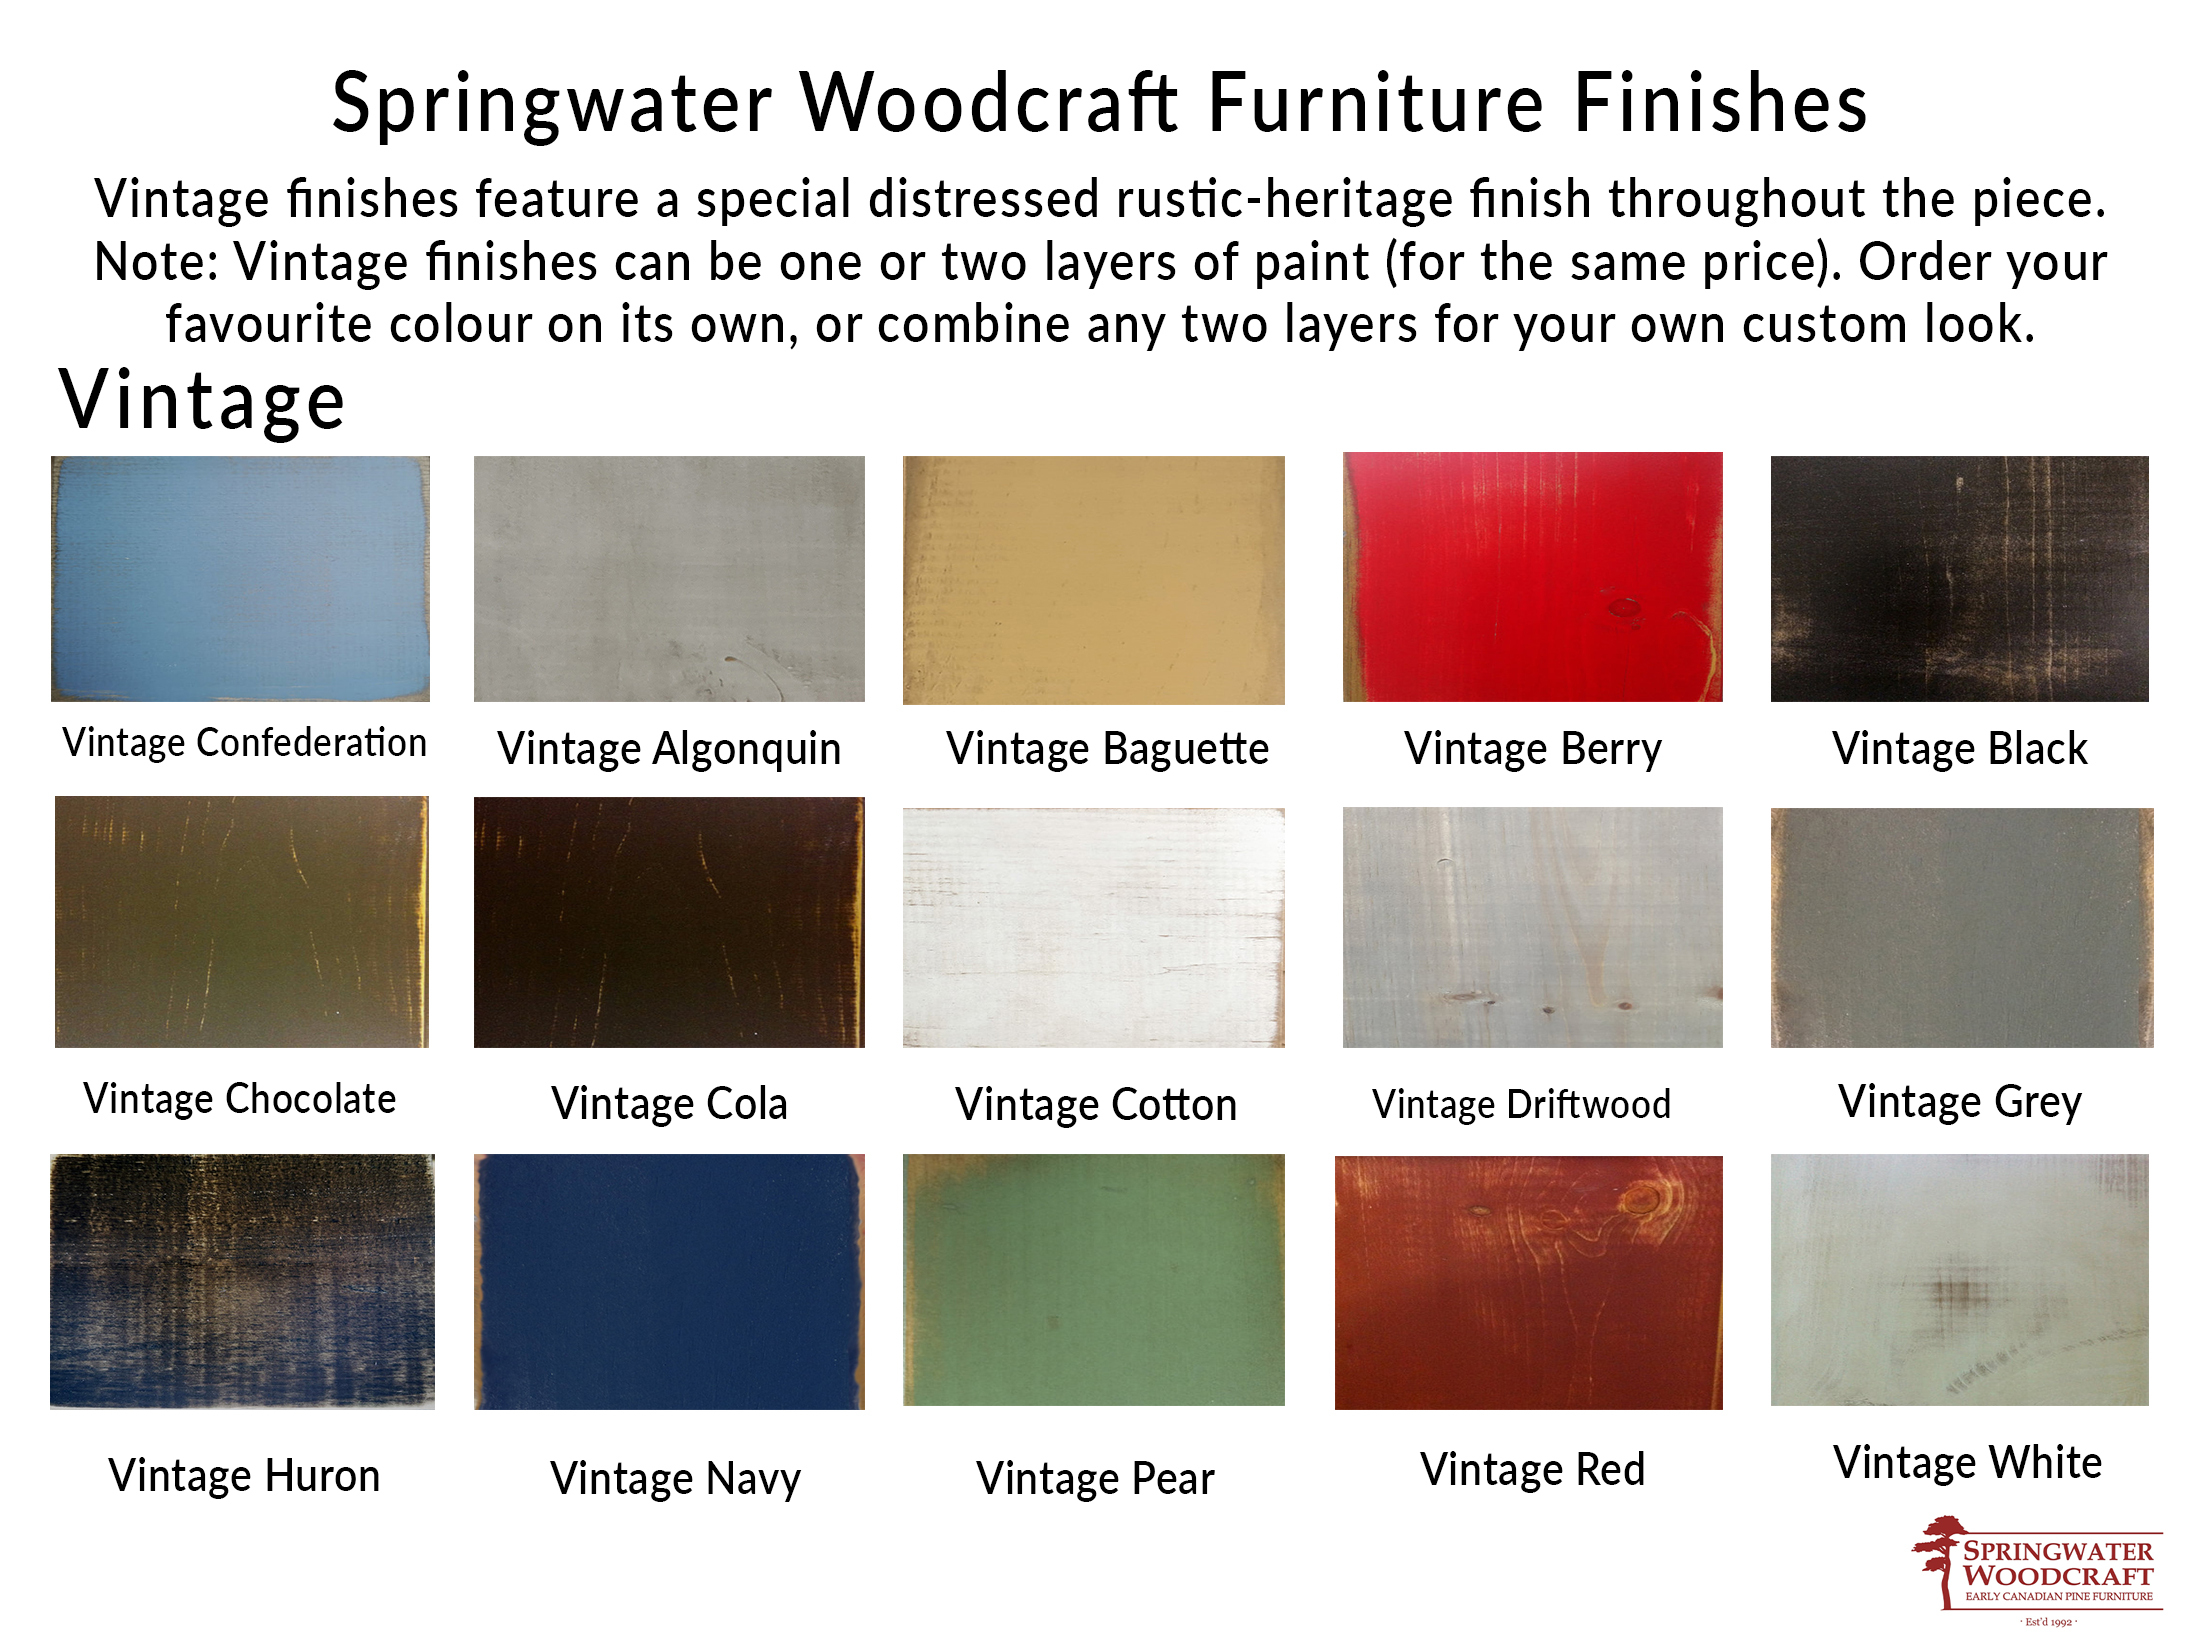 Vintage Finishes for Springwater Woodcraft